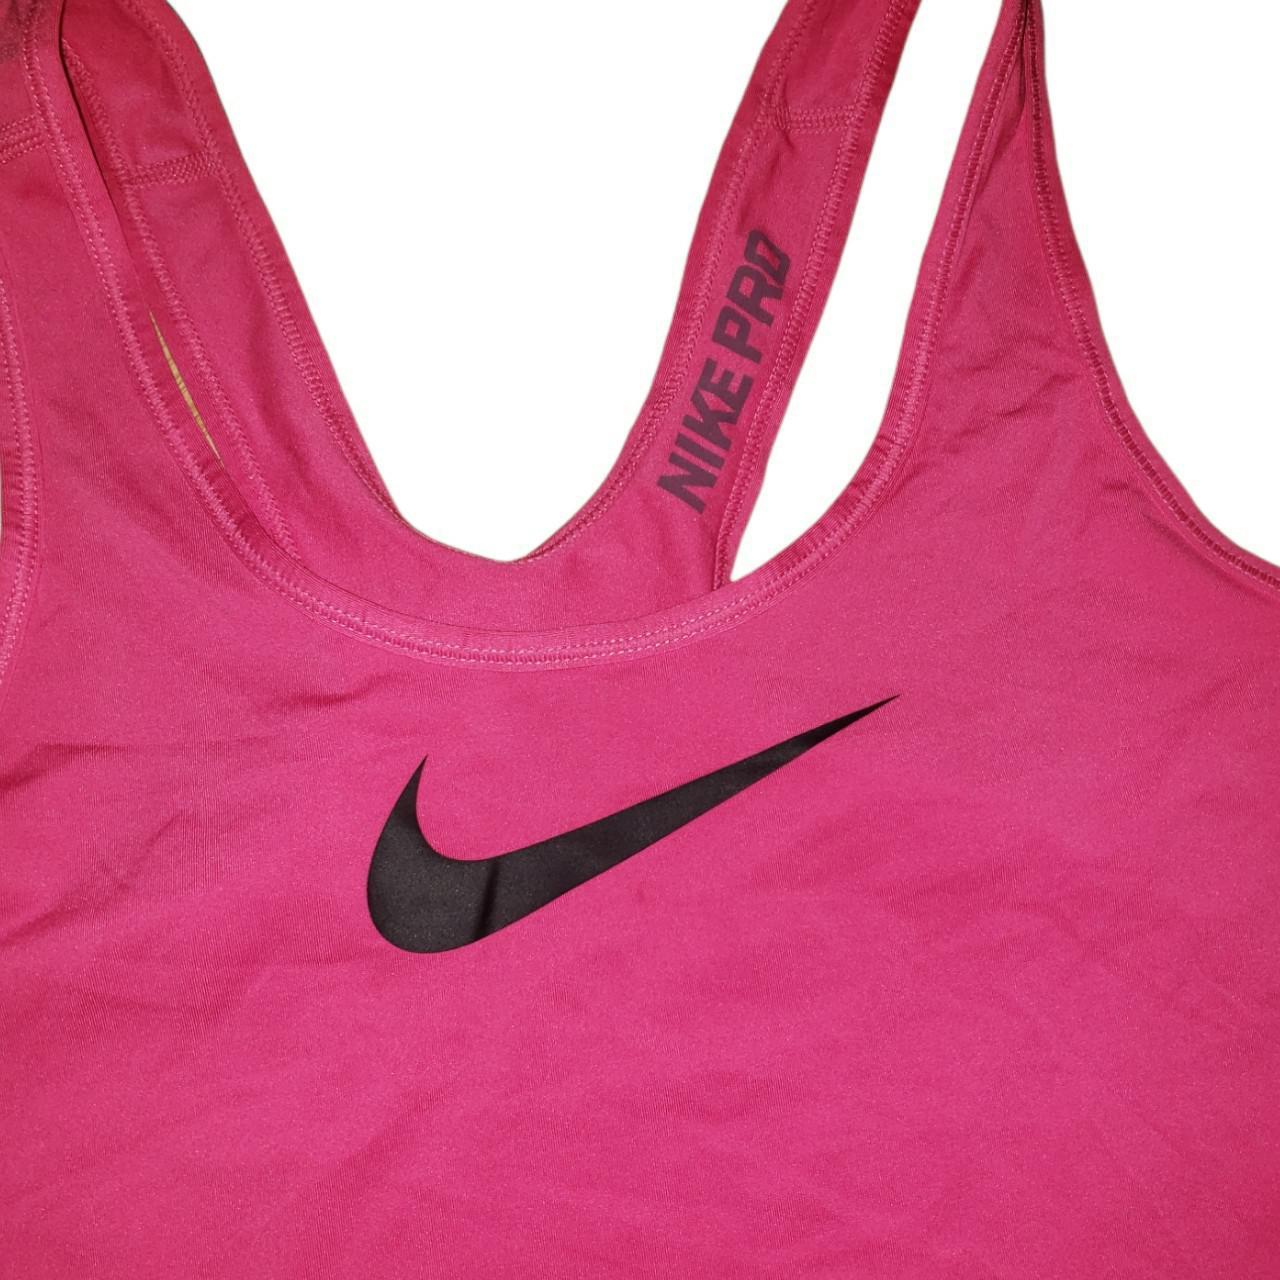 Nike Women's Pink Vests-tanks-camis (4)